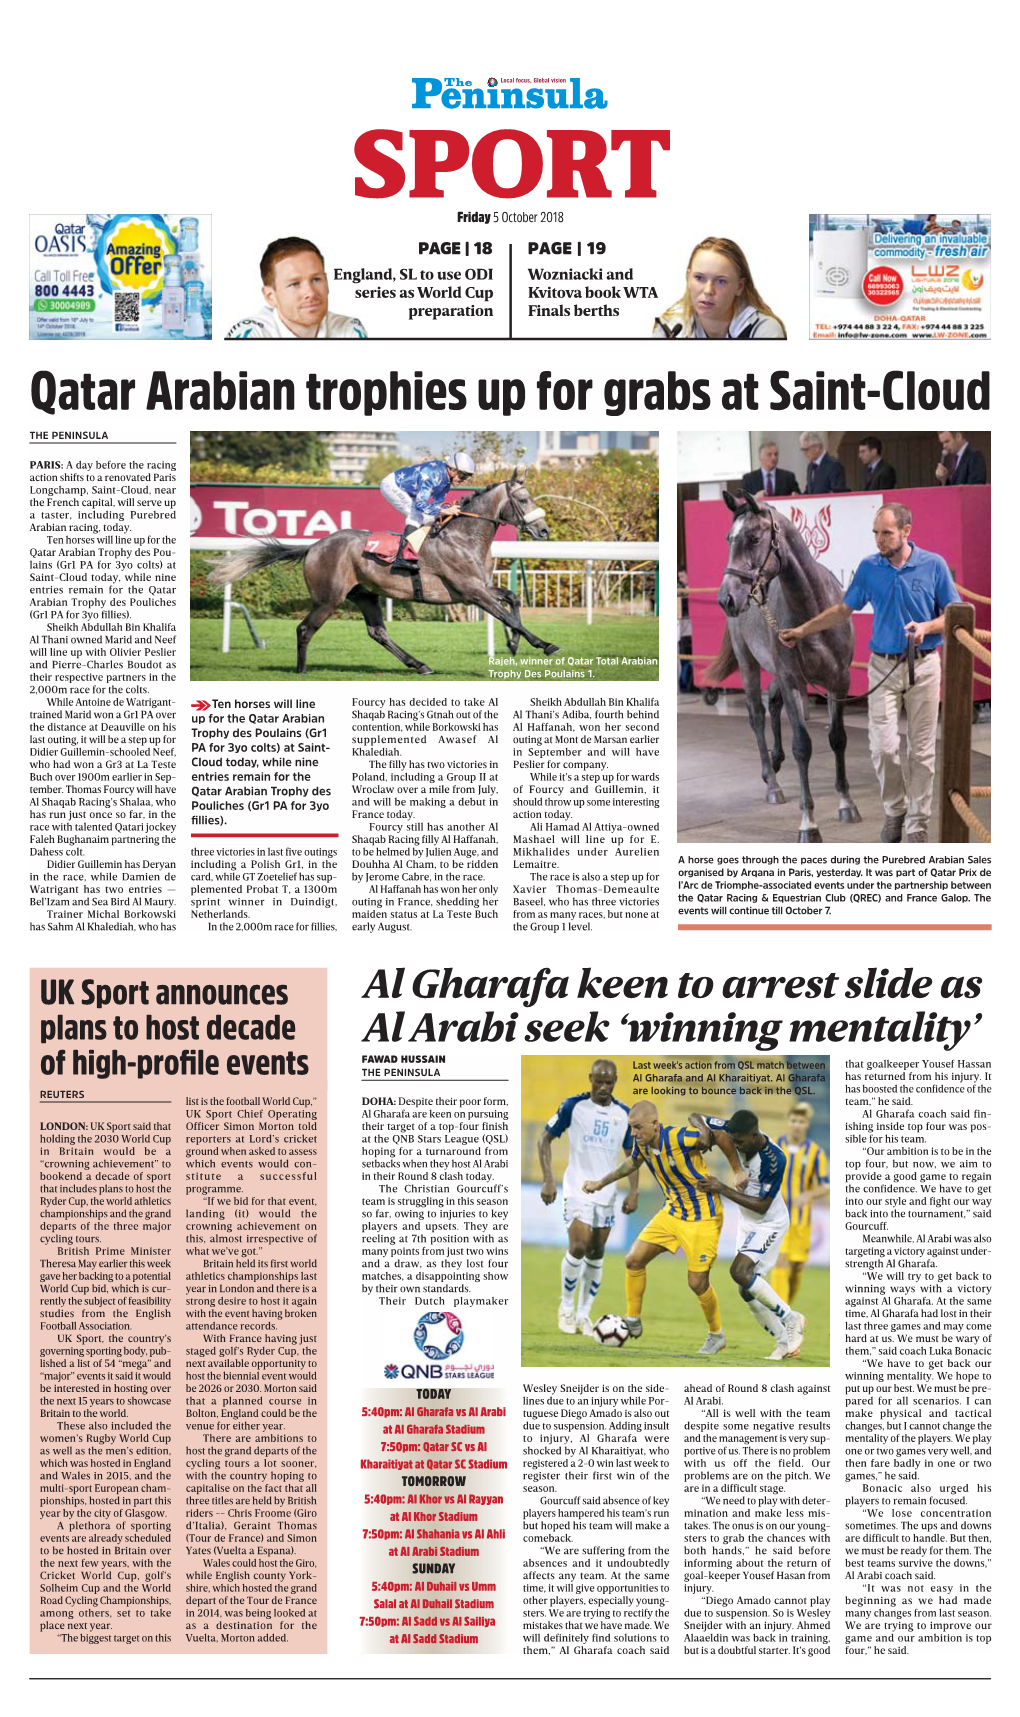 Qatar Arabian Trophies up for Grabs at Saint-Cloud